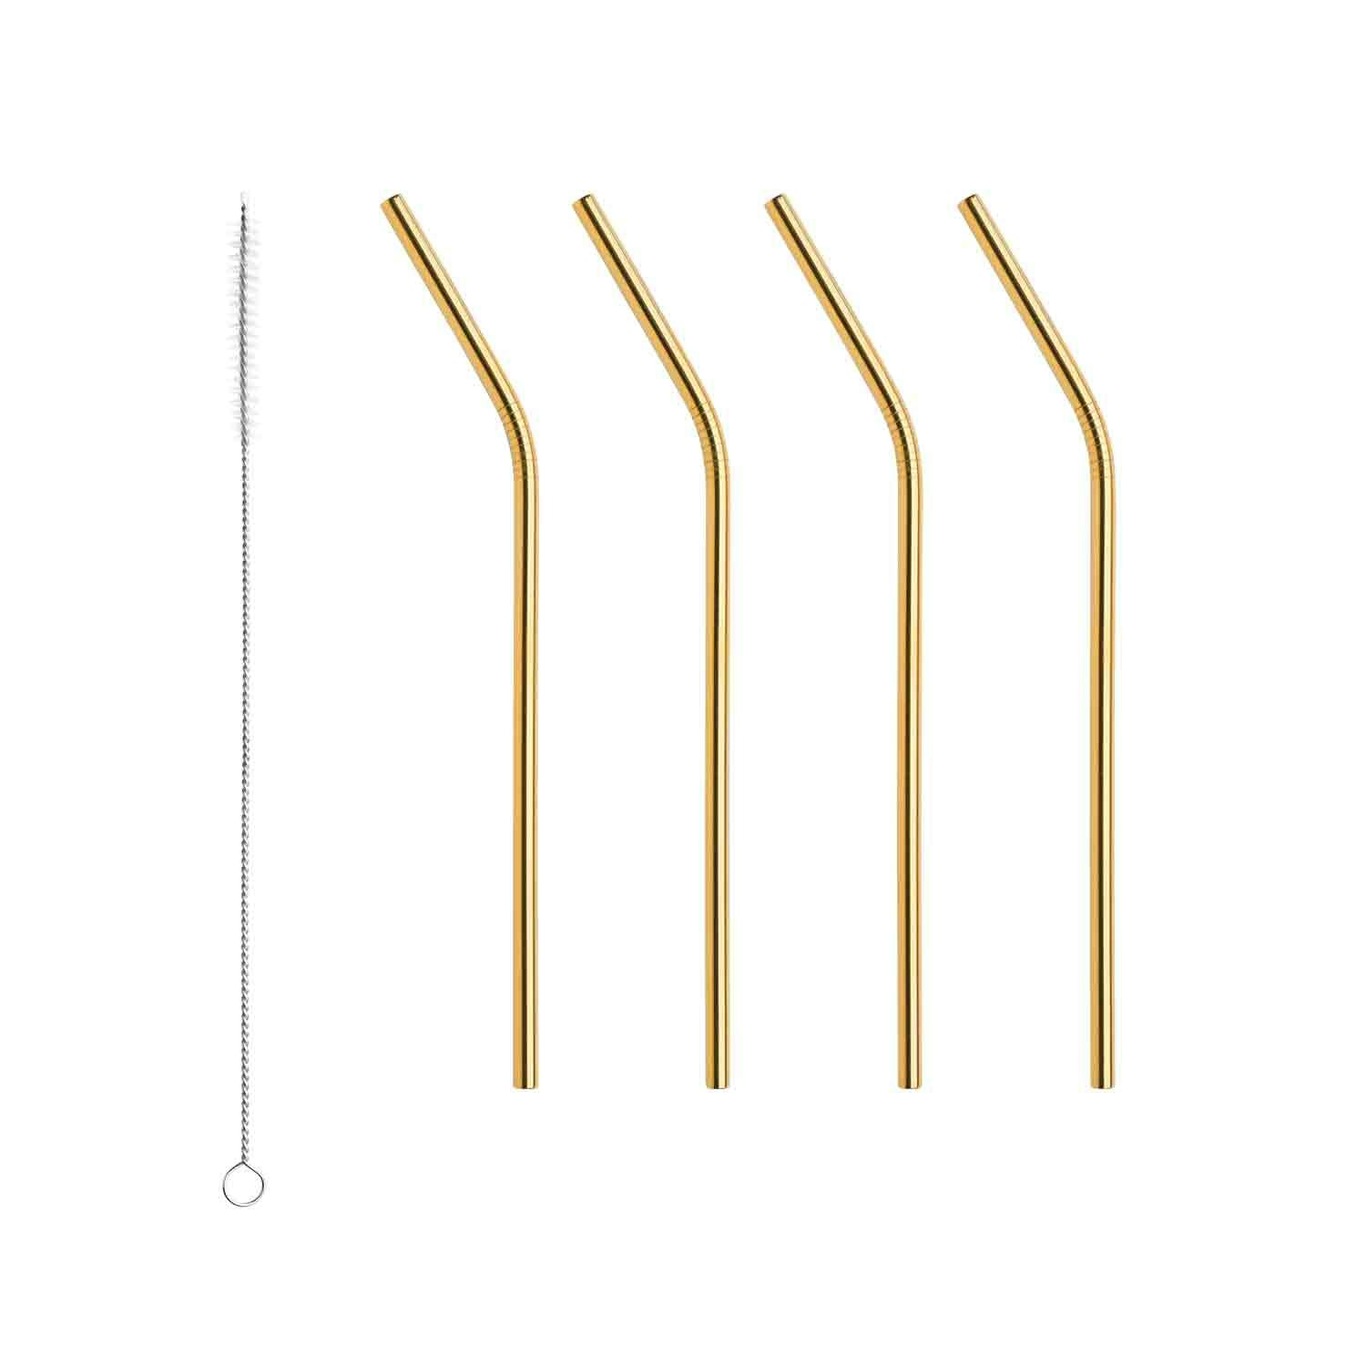 https://royaldesign.com/image/2/orrefors-peak-straws-incl-cleaning-brush-4-pack-0?w=800&quality=80